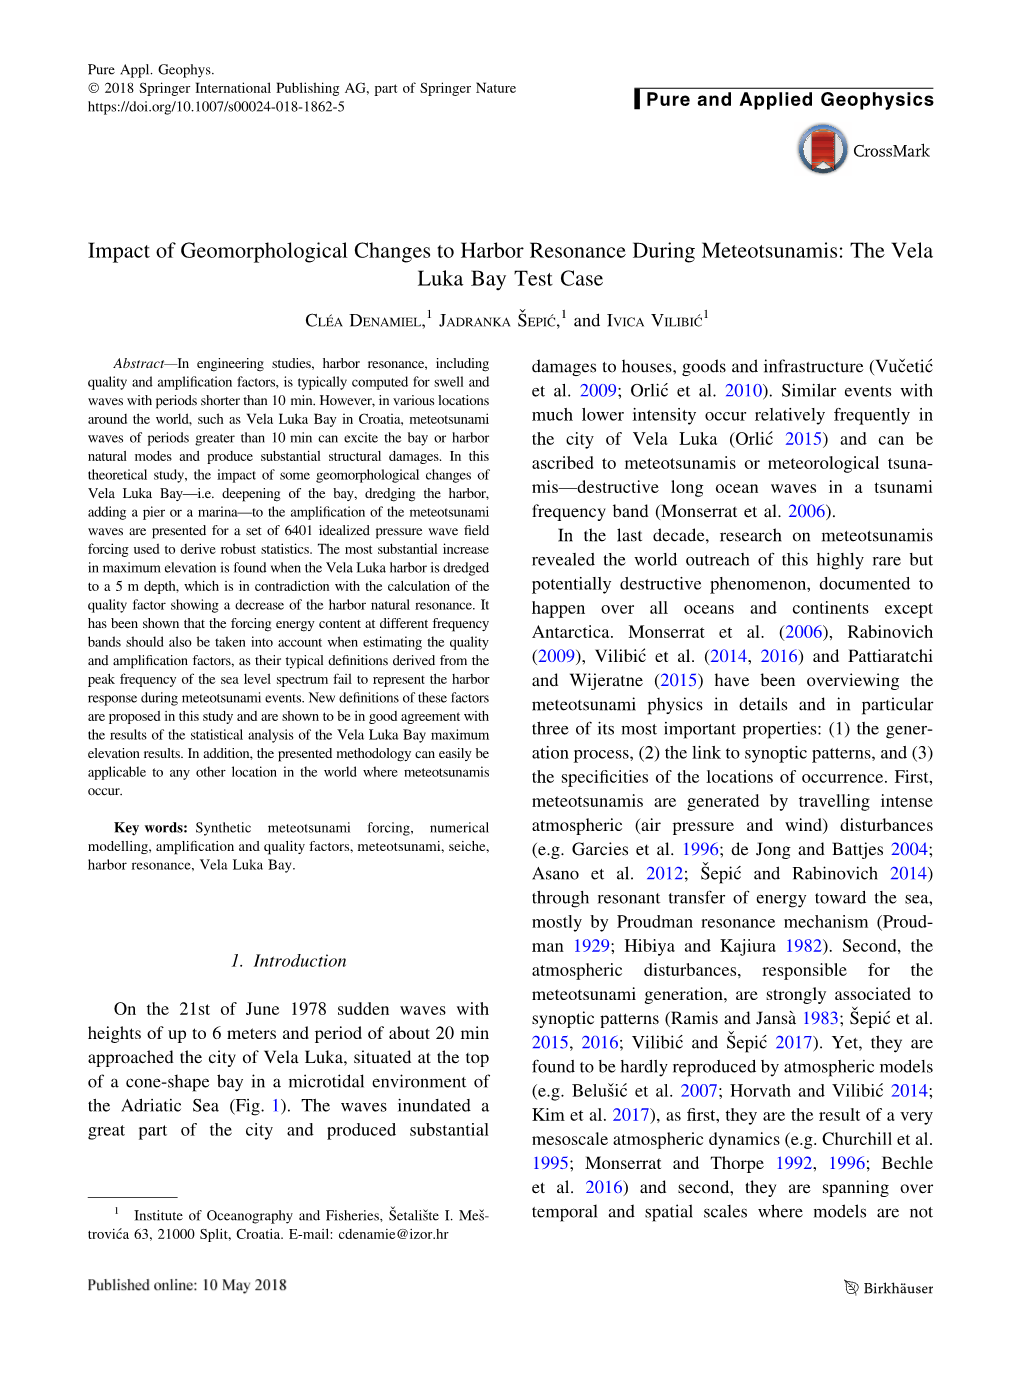 Impact of Geomorphological Changes to Harbor Resonance During Meteotsunamis: the Vela Luka Bay Test Case